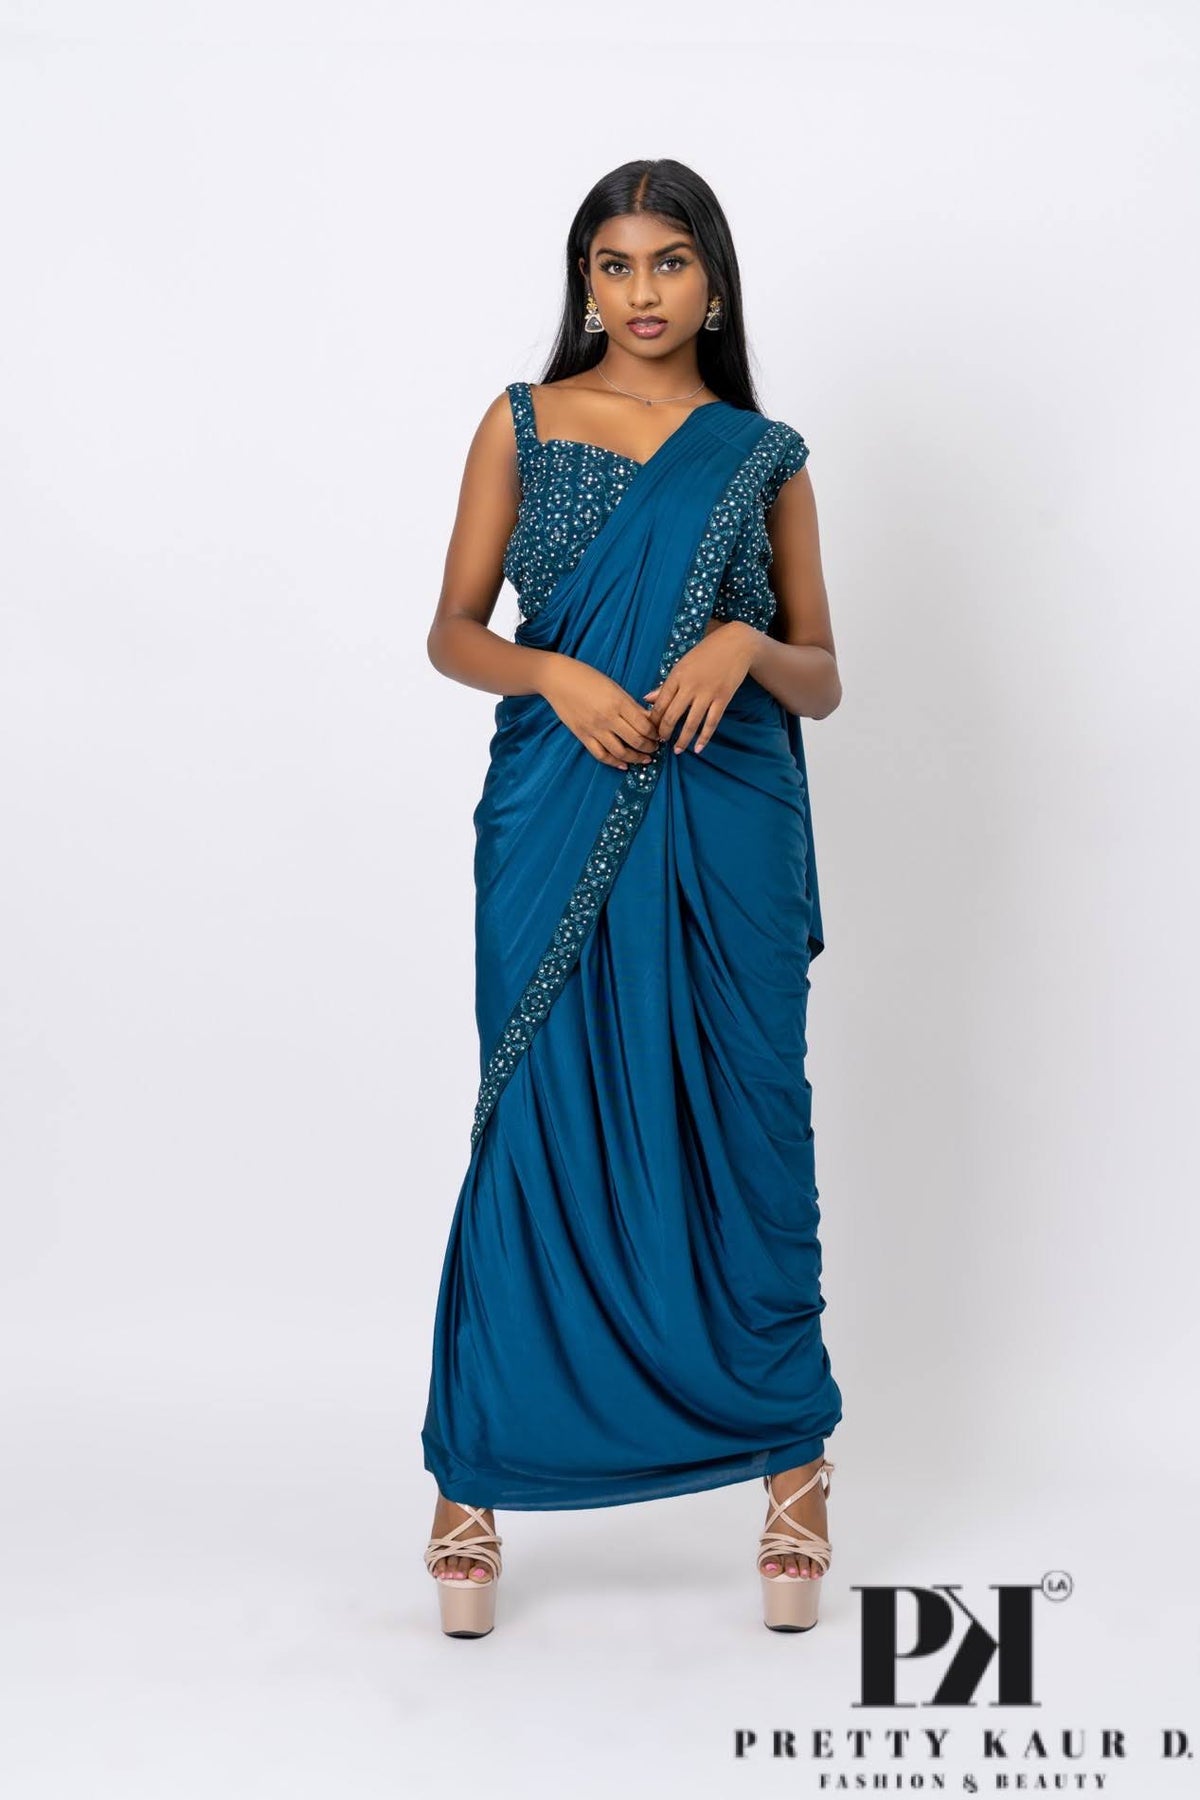  Pretty-Kaur-fashion-beauty-Indian-Designer-Saree-1